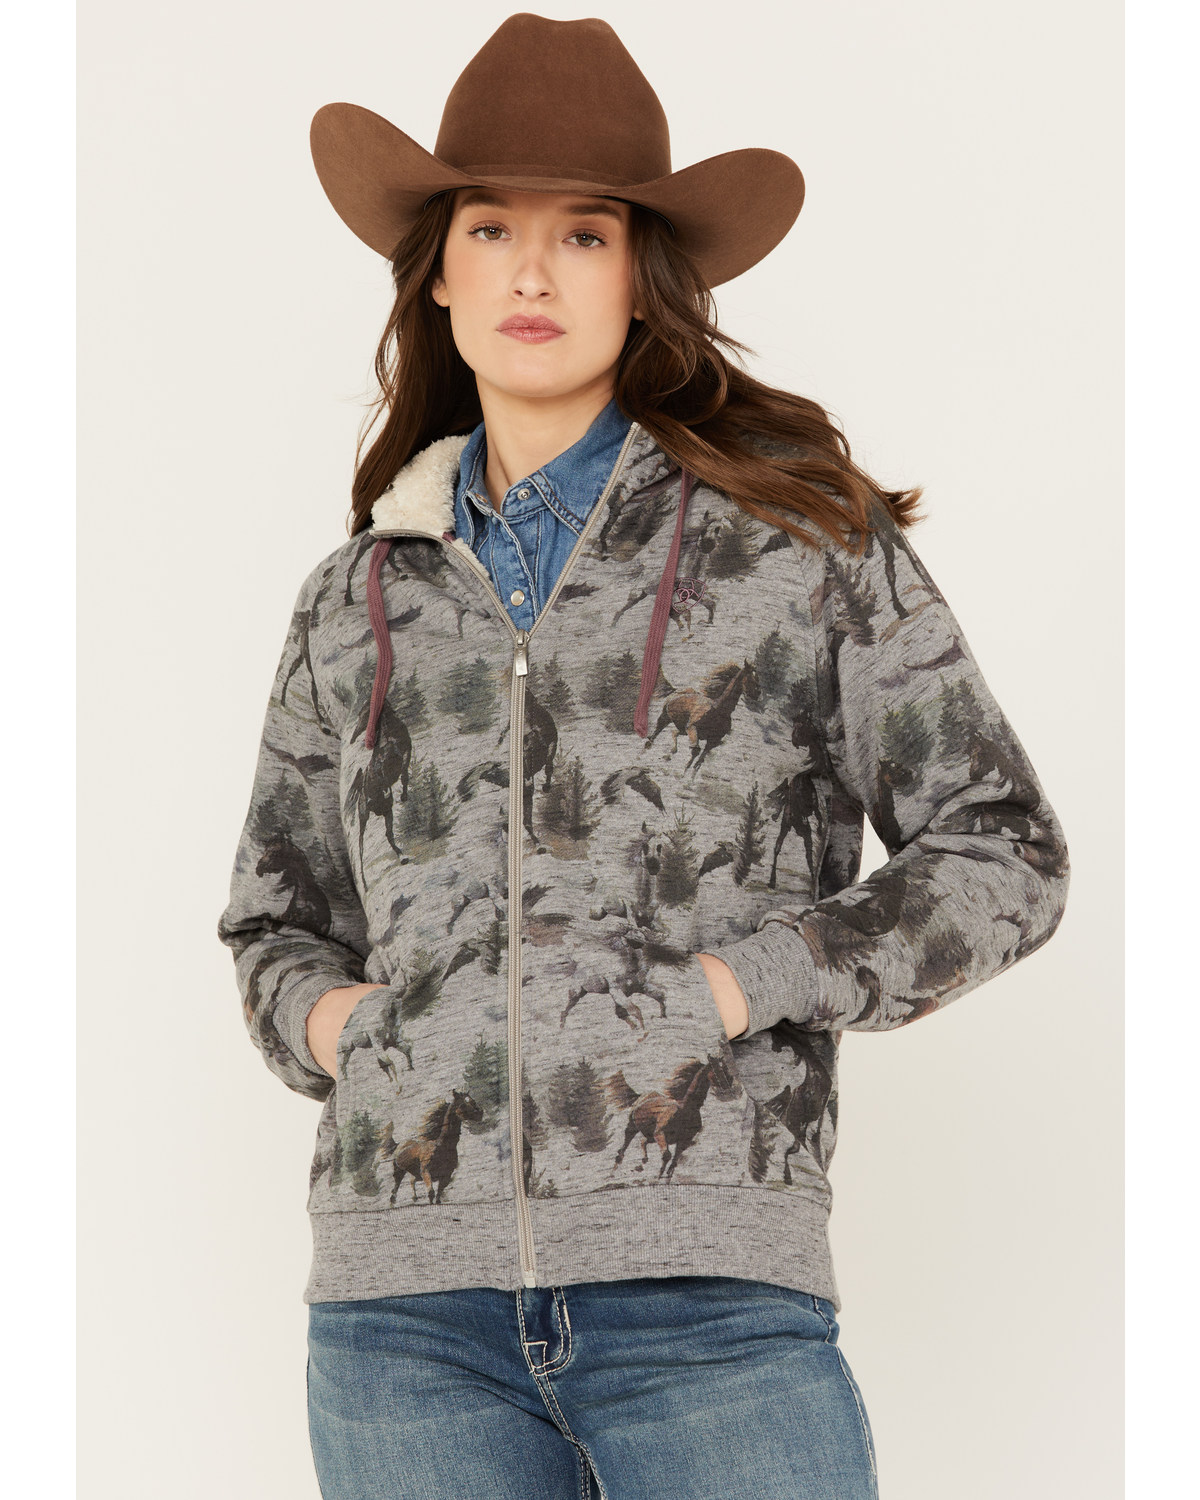 Ariat Women's R.E.A.L Horse Print Sherpa Lined Full Zip Hoodie